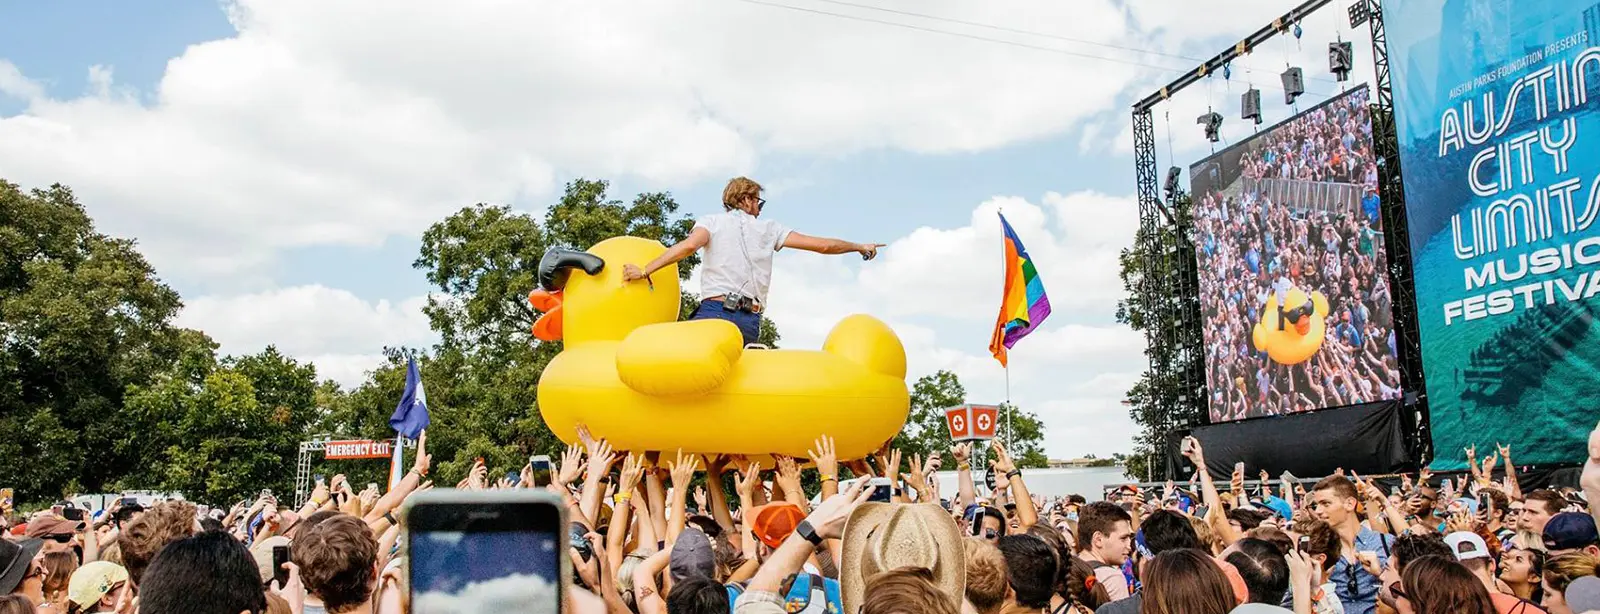 Festivals at Austin, Texas